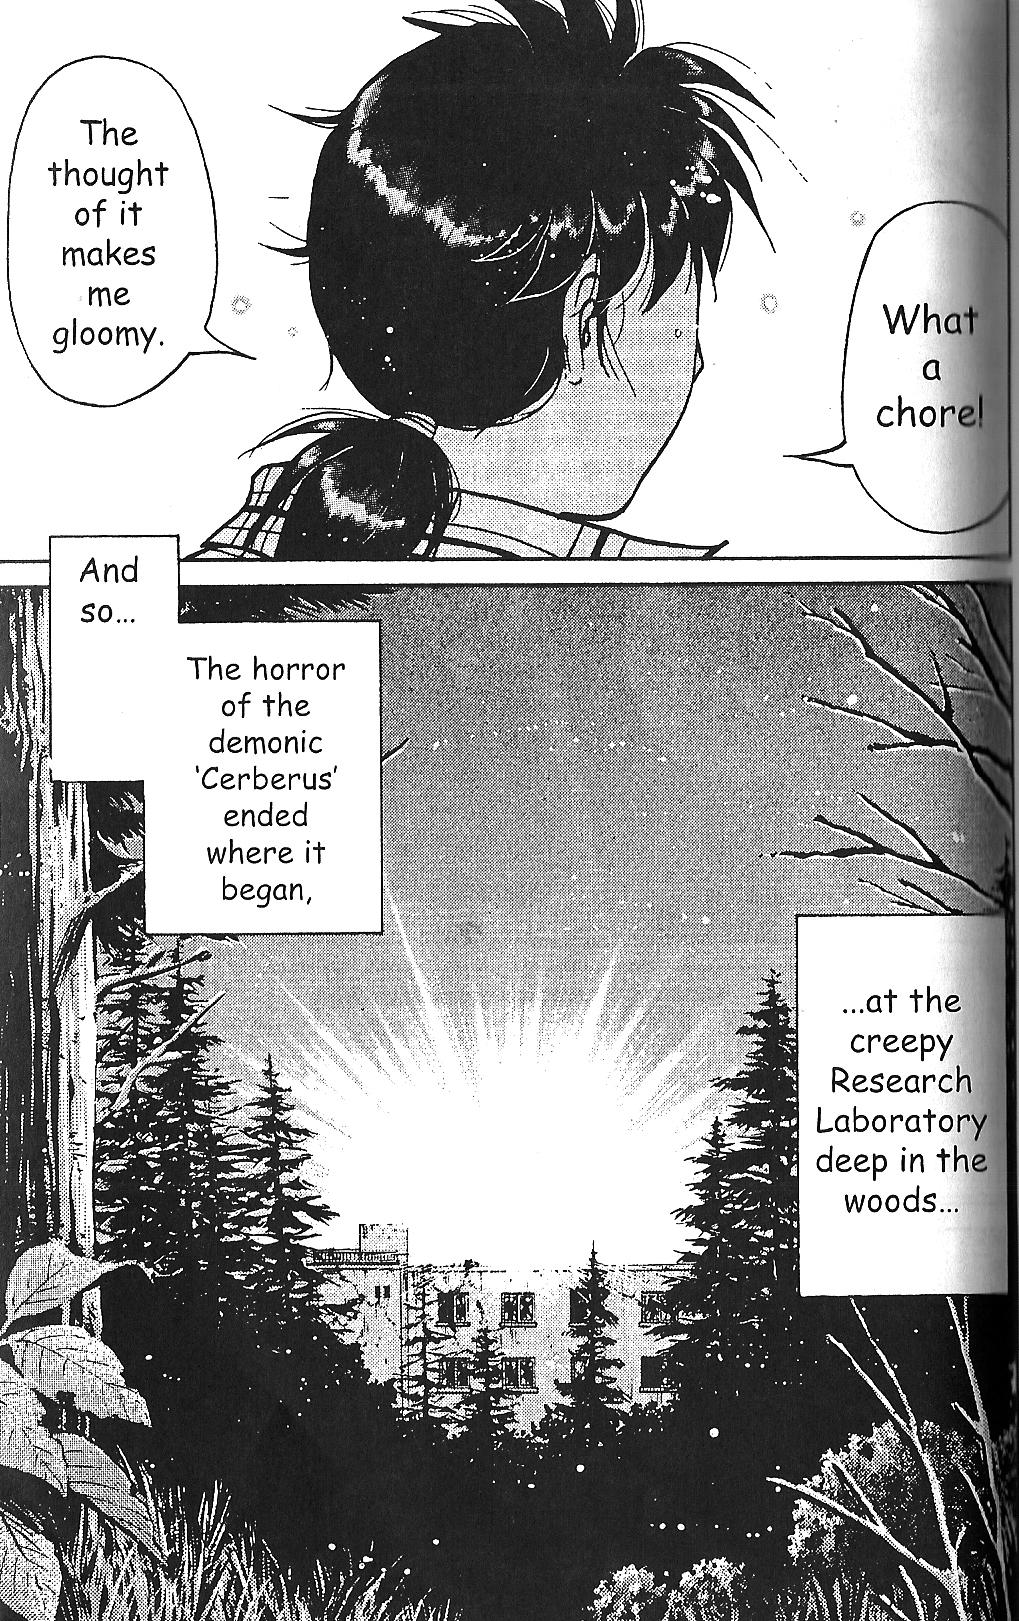 Kindaichi Shounen no Jikenbo Case Series Vol. 1 Ch. 9 Epilogue